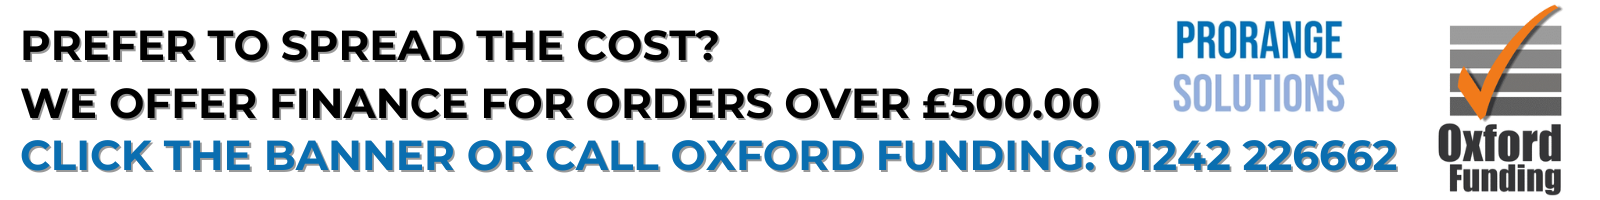 Oxford Funding (Financing) - 01242 226662